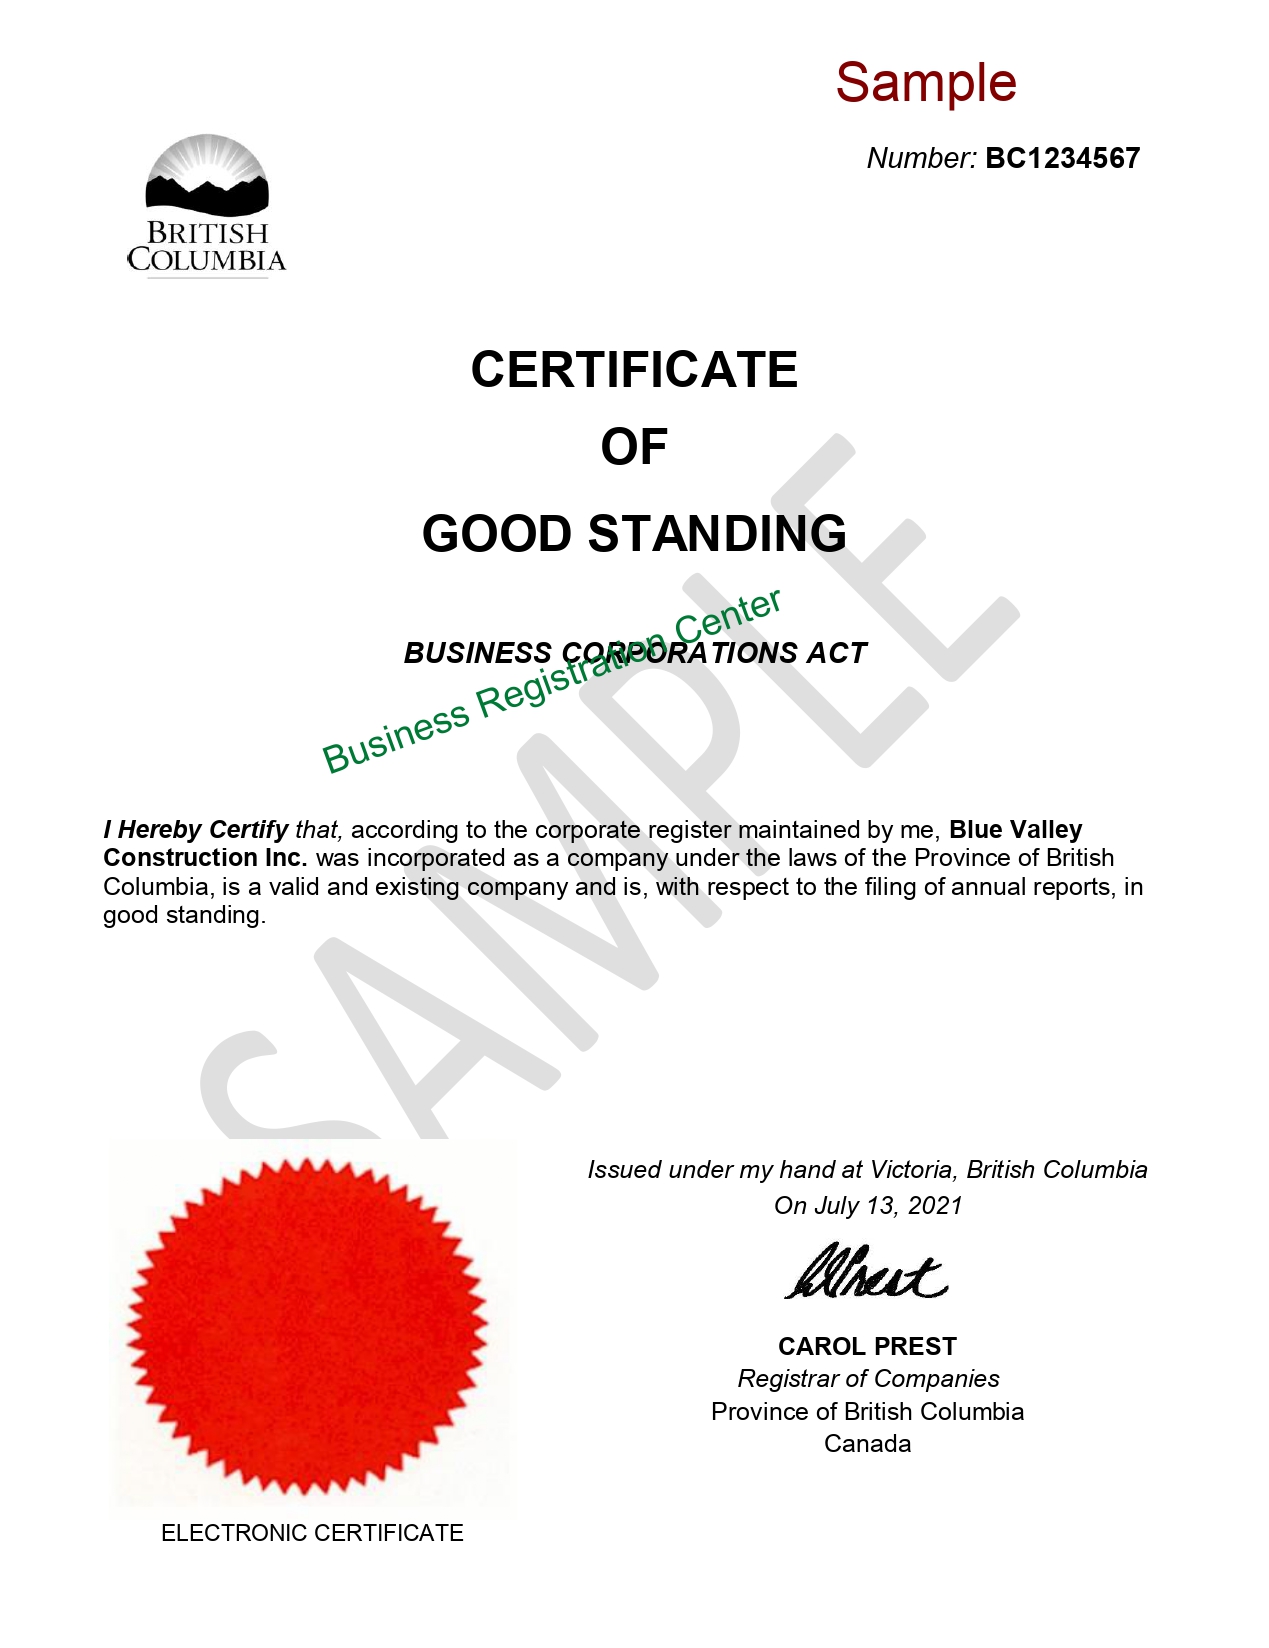 Sample For Certificate Of Good Standing Business Registration Center